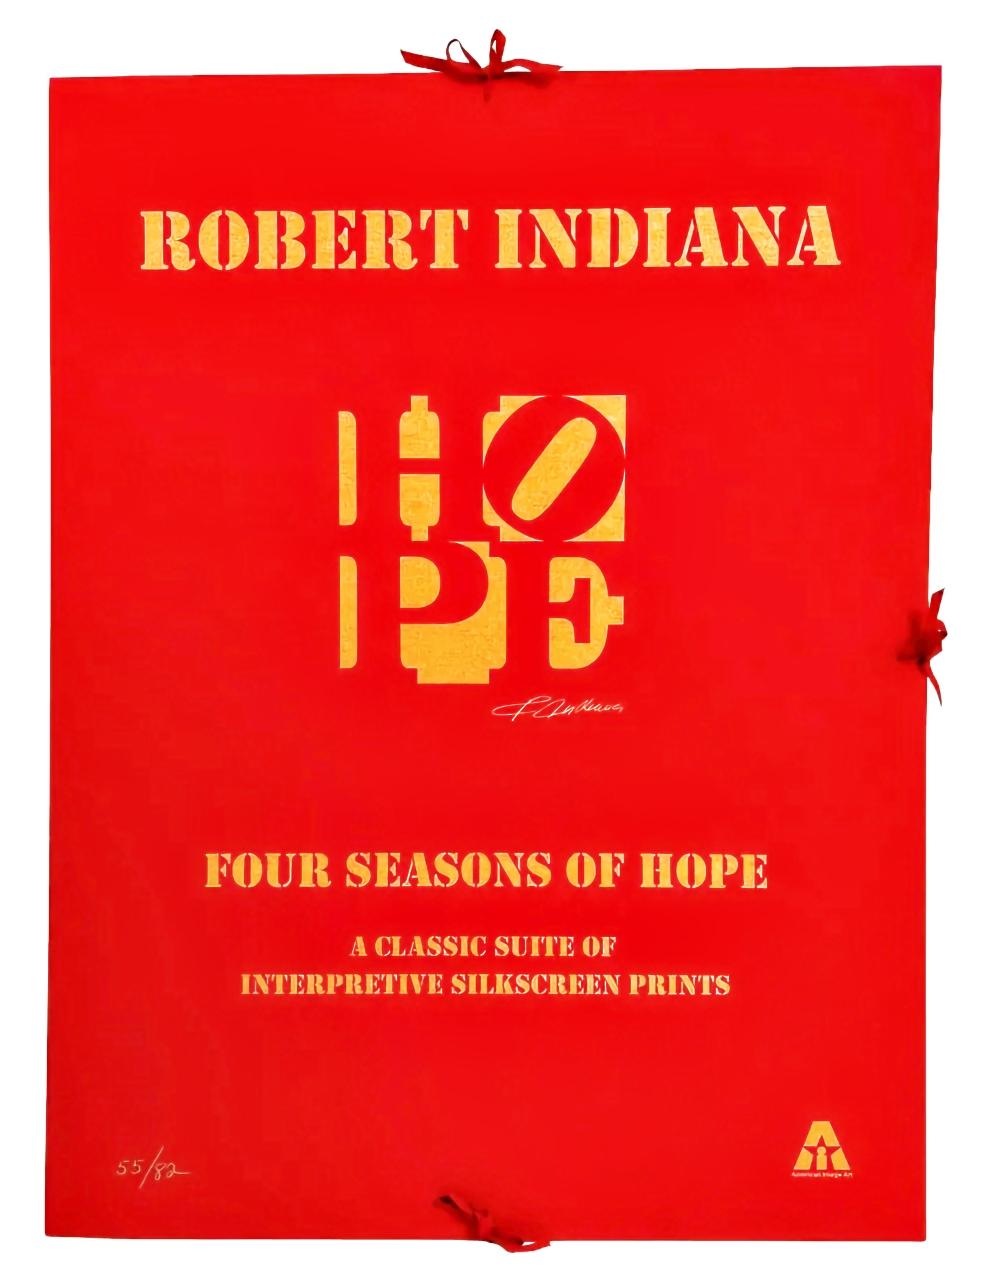 Robert Indiana - Four Seasons of Hope (Gold portfolio)